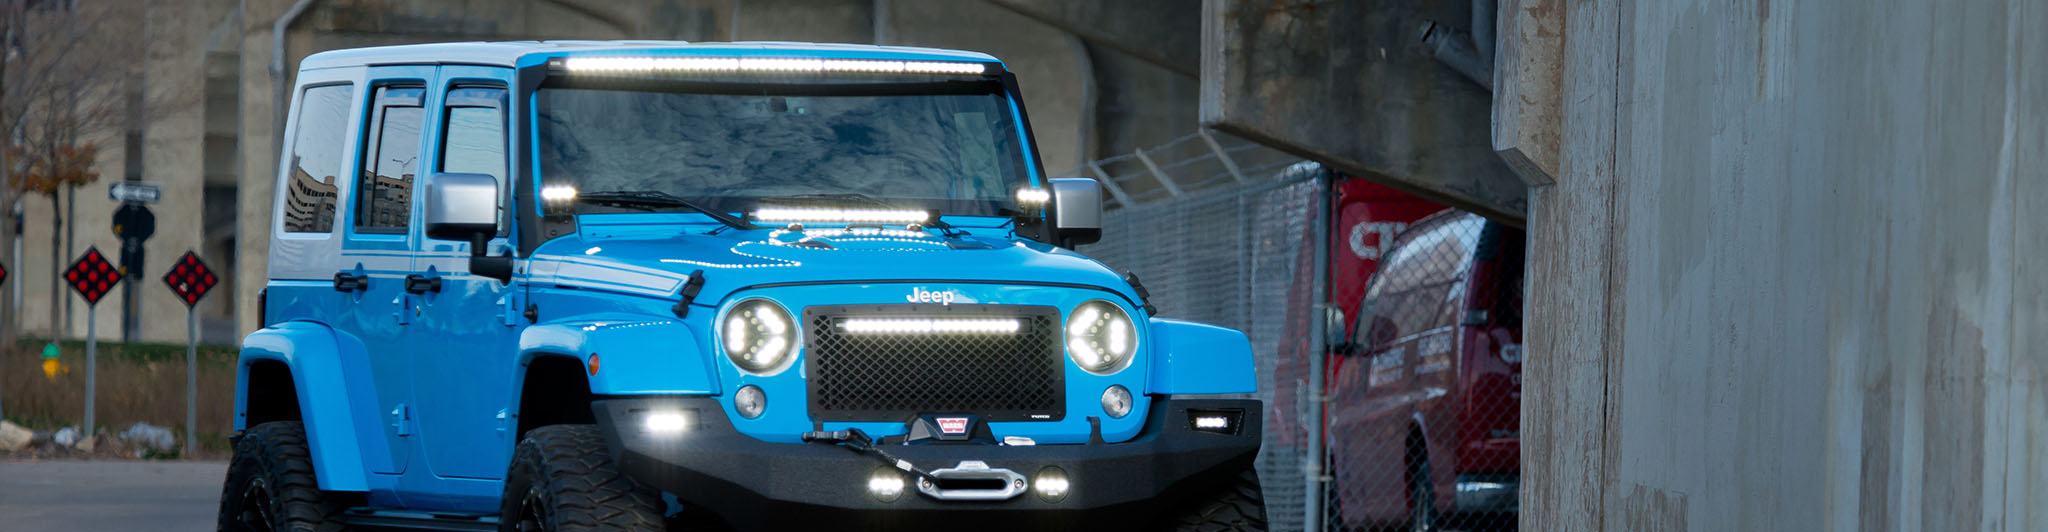 Putco Luminix Jeep Wrangler Hood Mounted LED Light Bar Kit